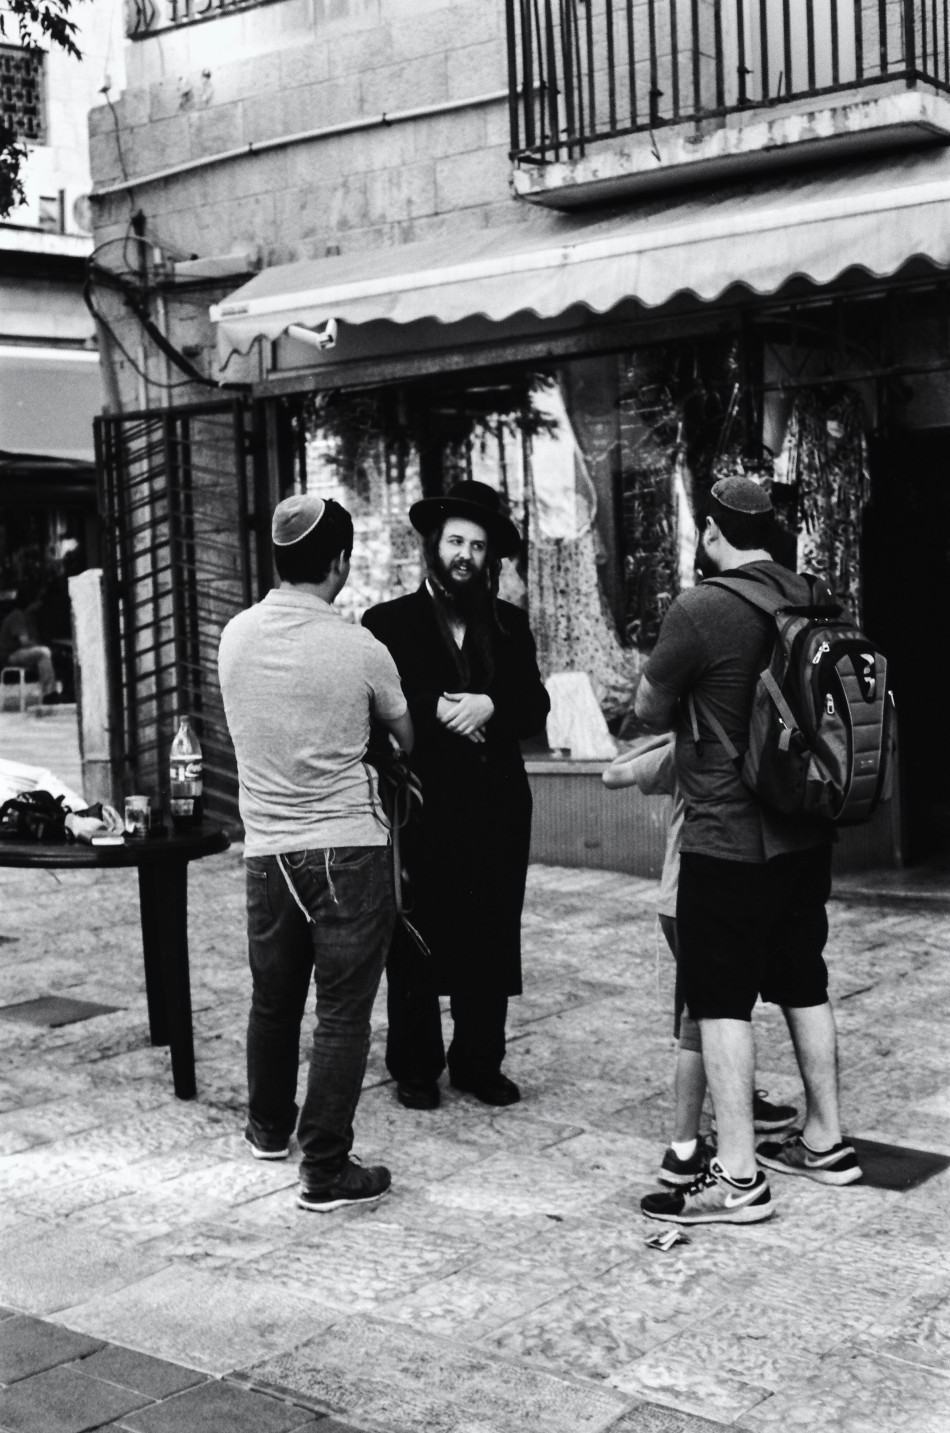 Talmudic Discussion on Ben Yehuda